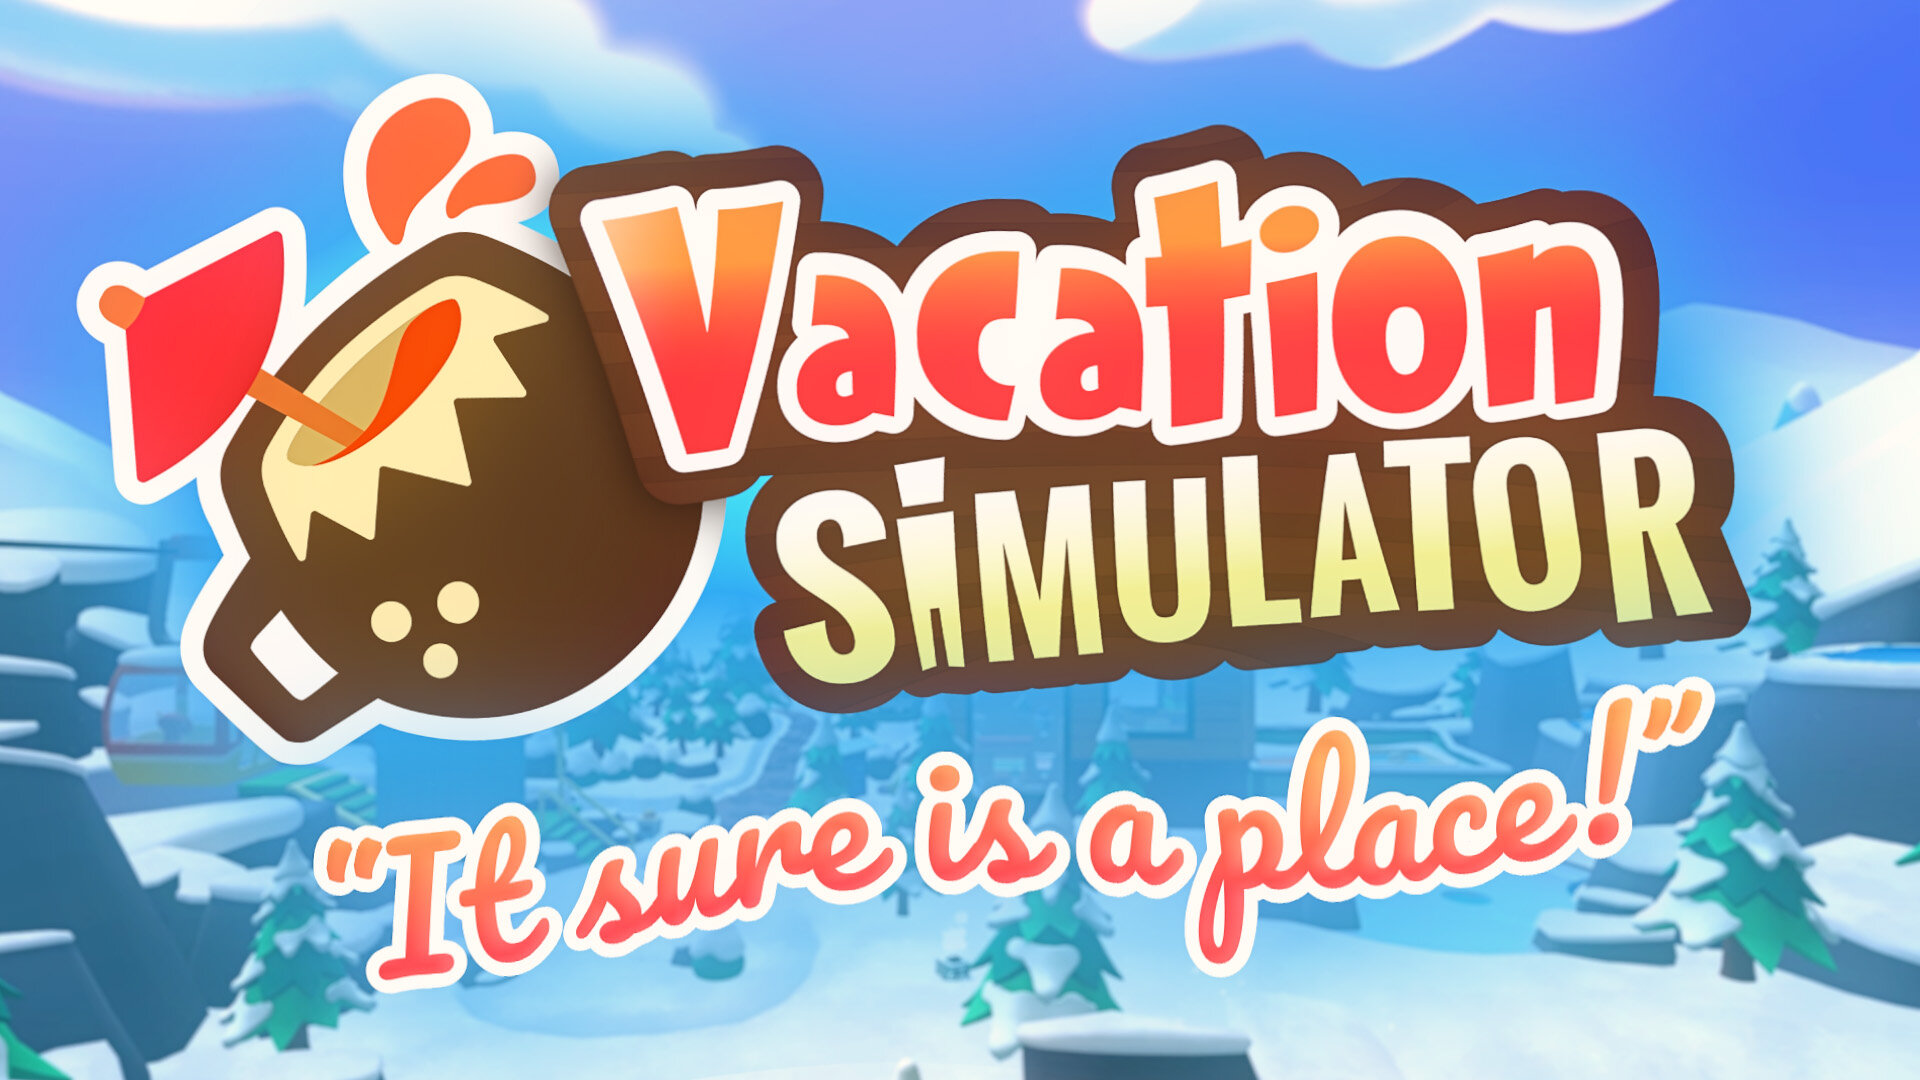 Vacation vr. Симулятор отдыха. Симулятор отдыха VR. Job Simulator отпуск. Vacation Simulator для PS.